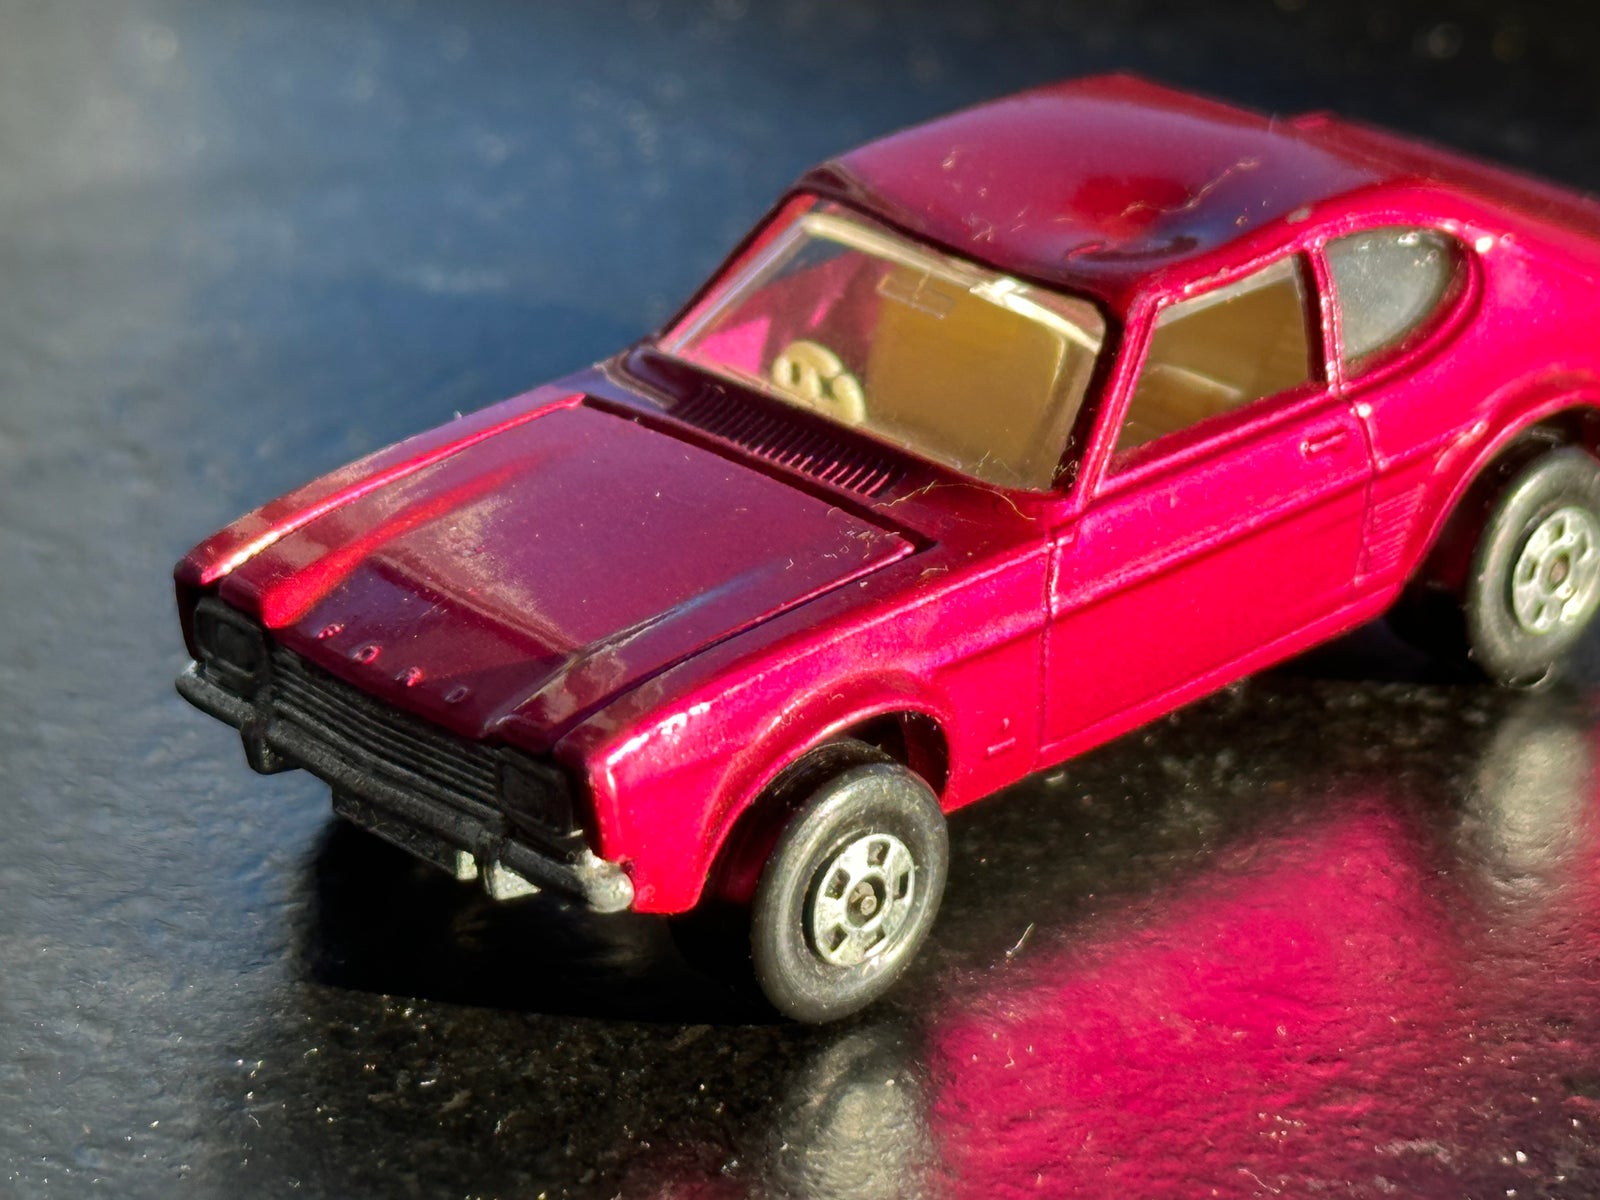 Ford Capri, Matchbox